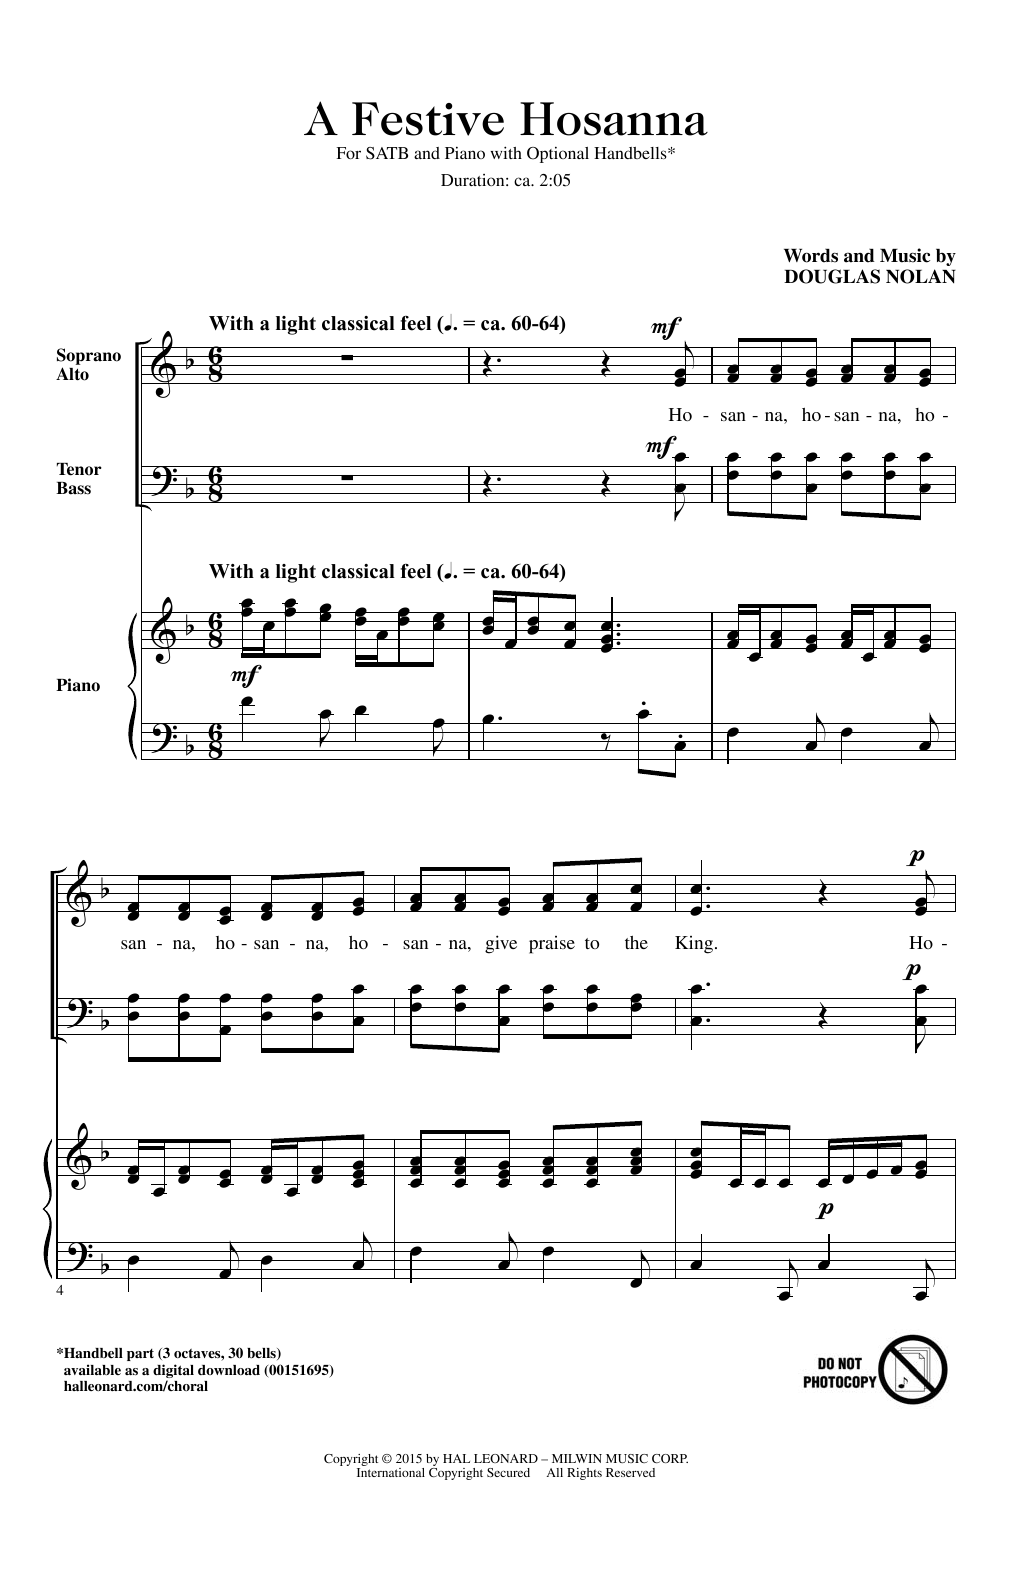 Douglas Nolan A Festive Hosanna Sheet Music Notes & Chords for SATB - Download or Print PDF